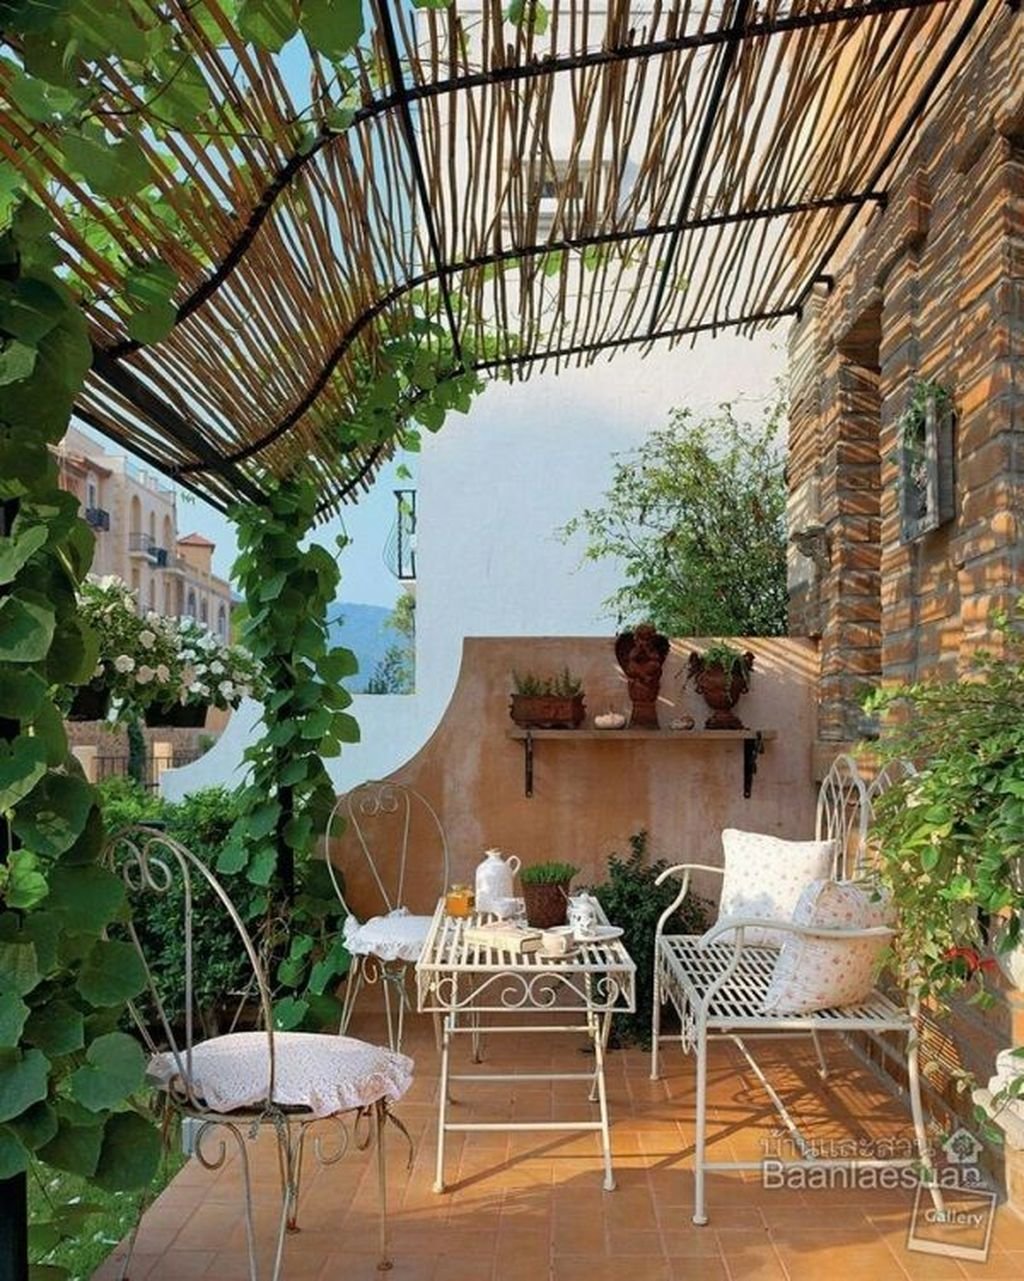 Плющ на балконе. Патио внутренний дворик в Италии. Гарден патио на балконе. Итальянский дворик патио.